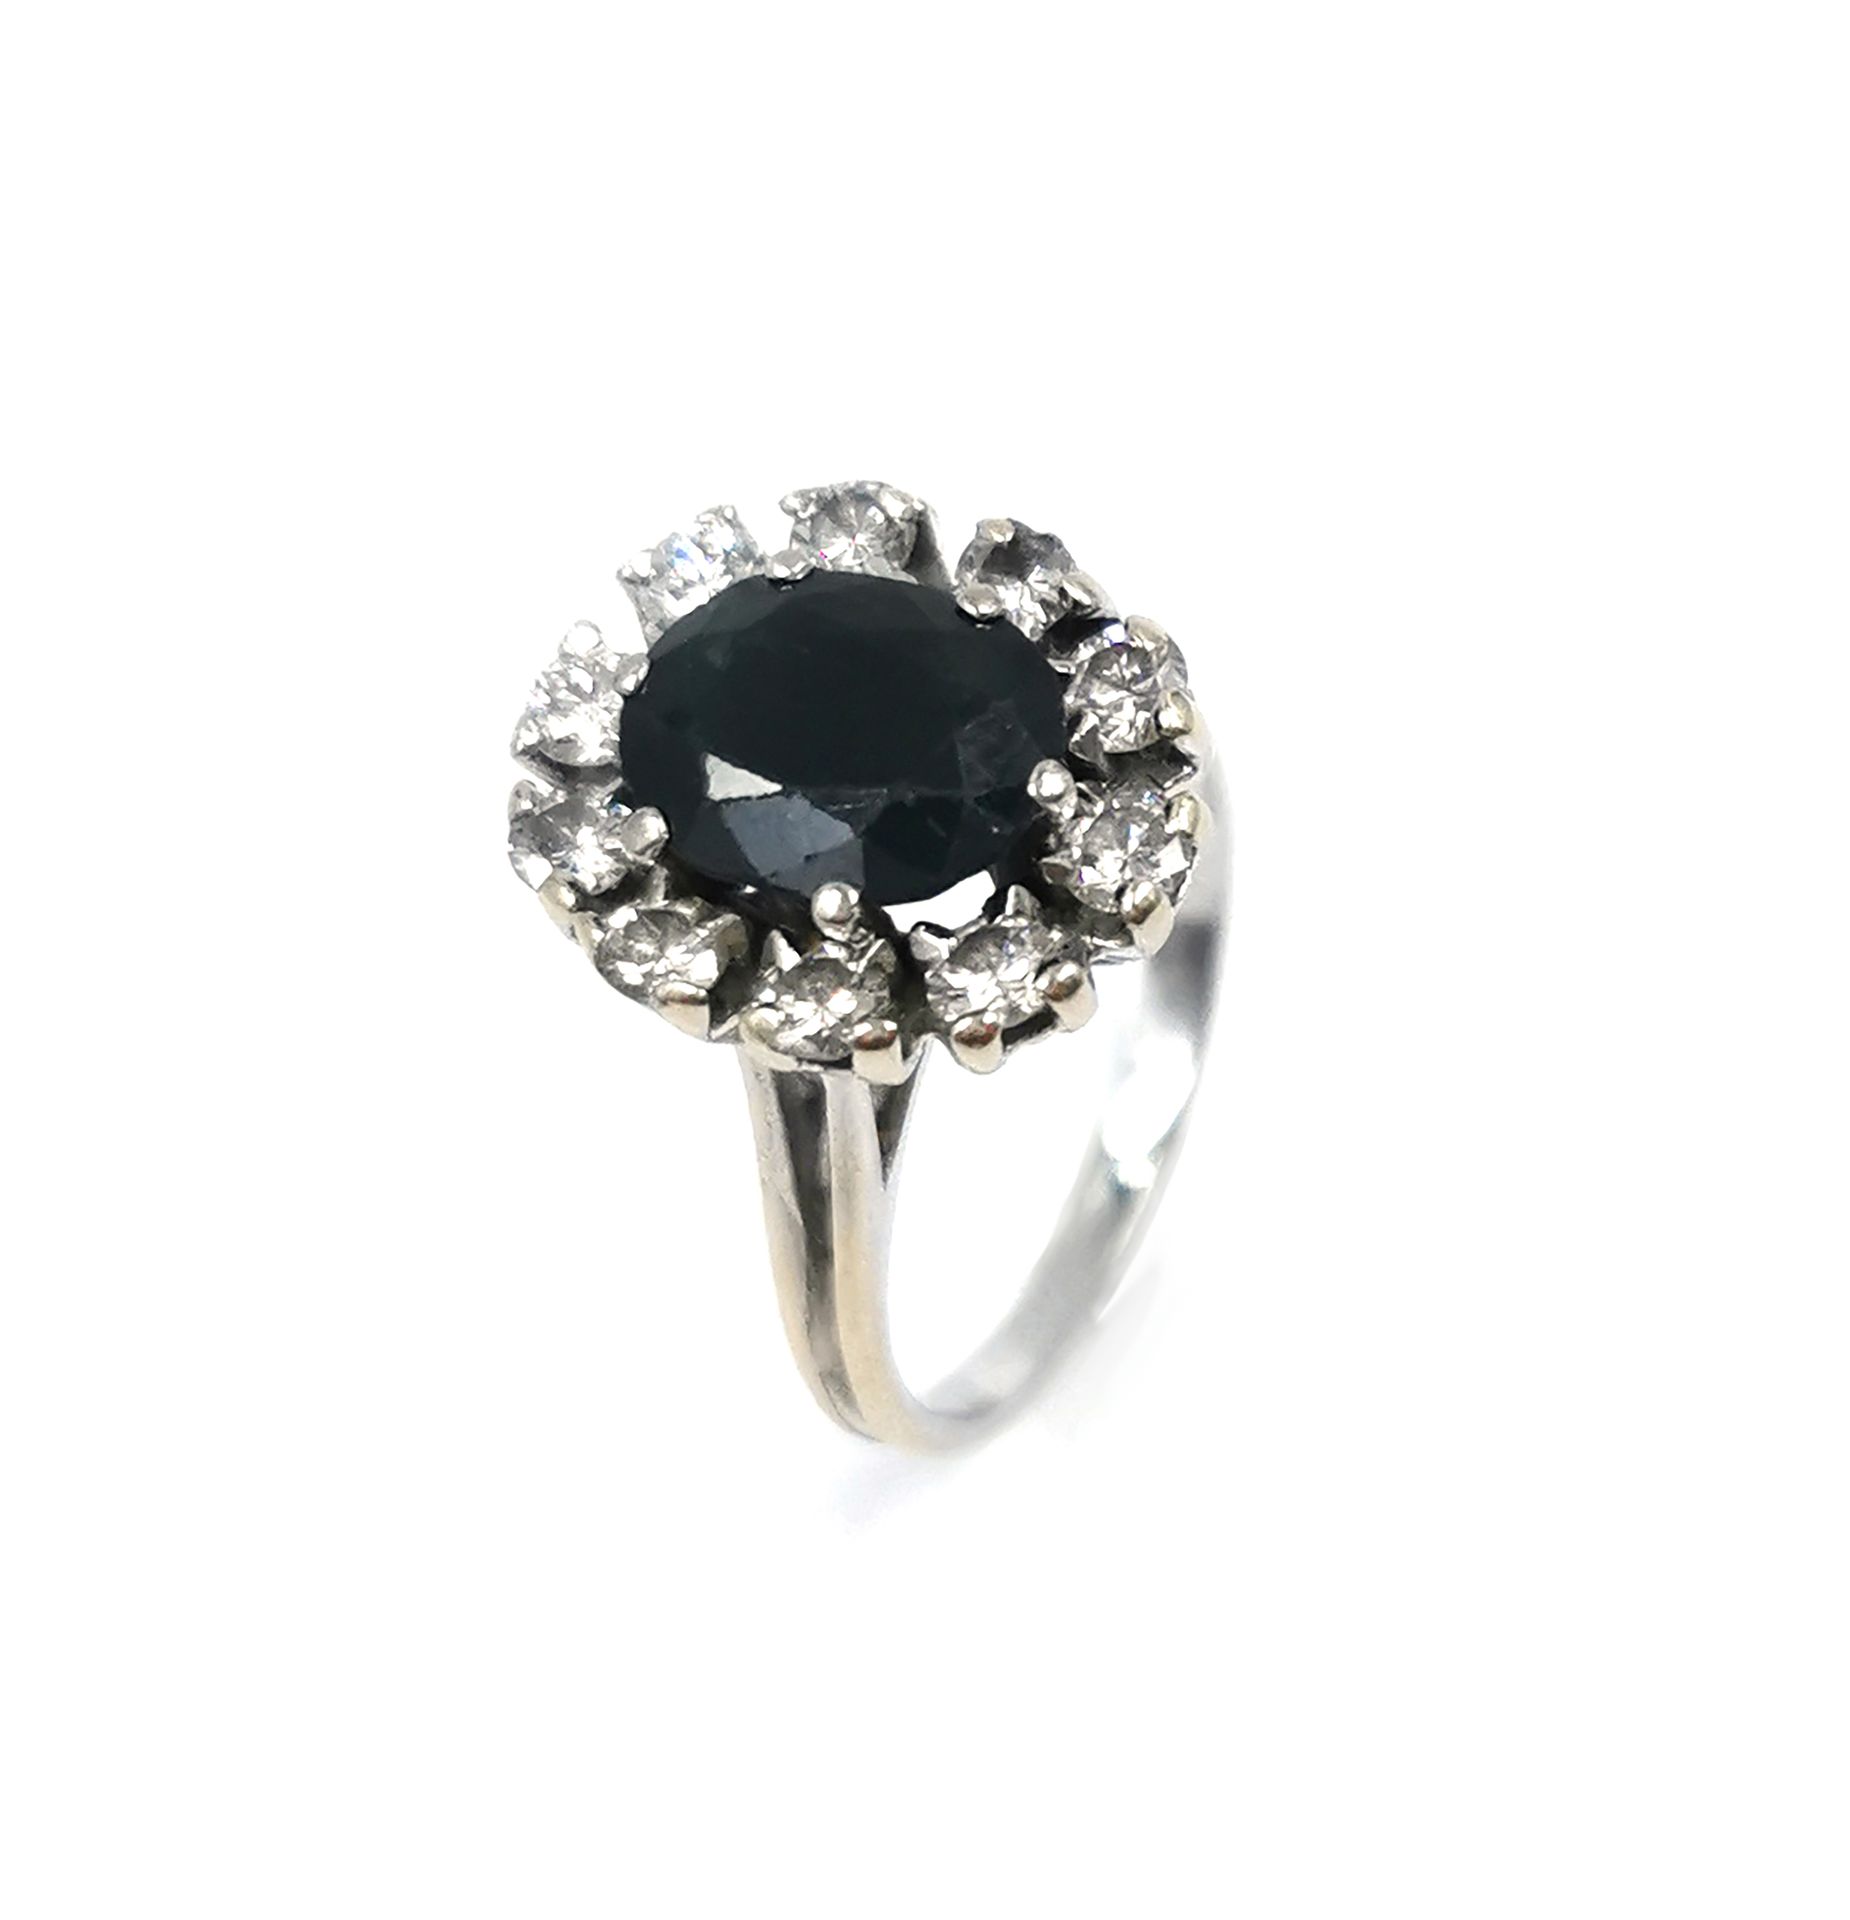 Null 18K（750千分之一）白金戒指，镶有一颗椭圆形刻面蓝宝石（有些碎片），并镶嵌有十颗圆形明亮型钻石

手指大小：53

毛重：5.8克。